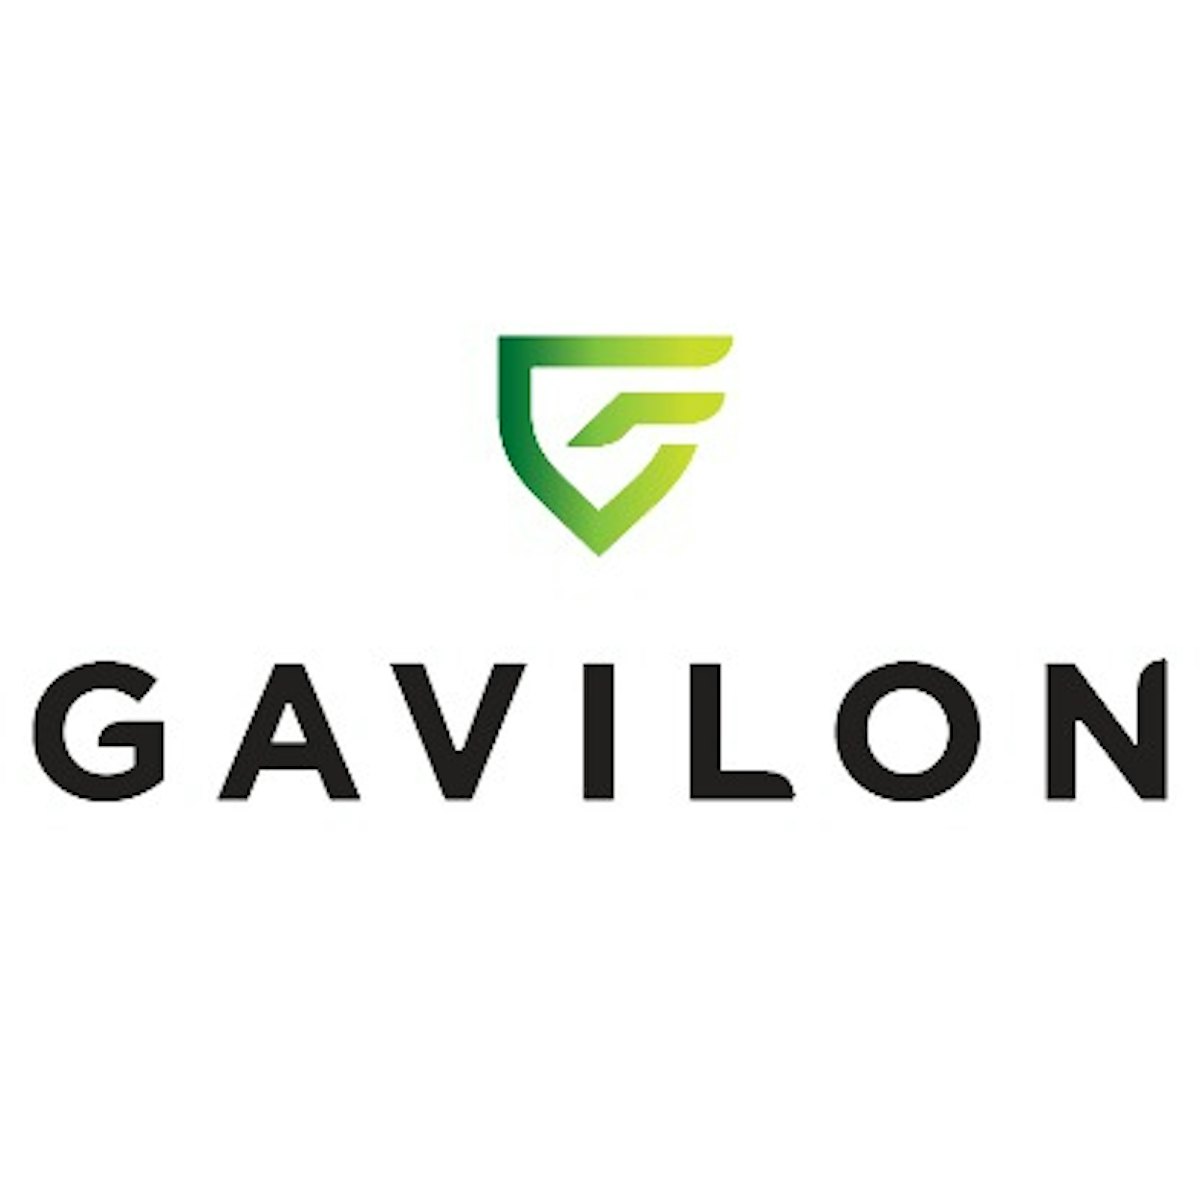 Former Gavilon exec joins Agro.Club Brazil as CEO